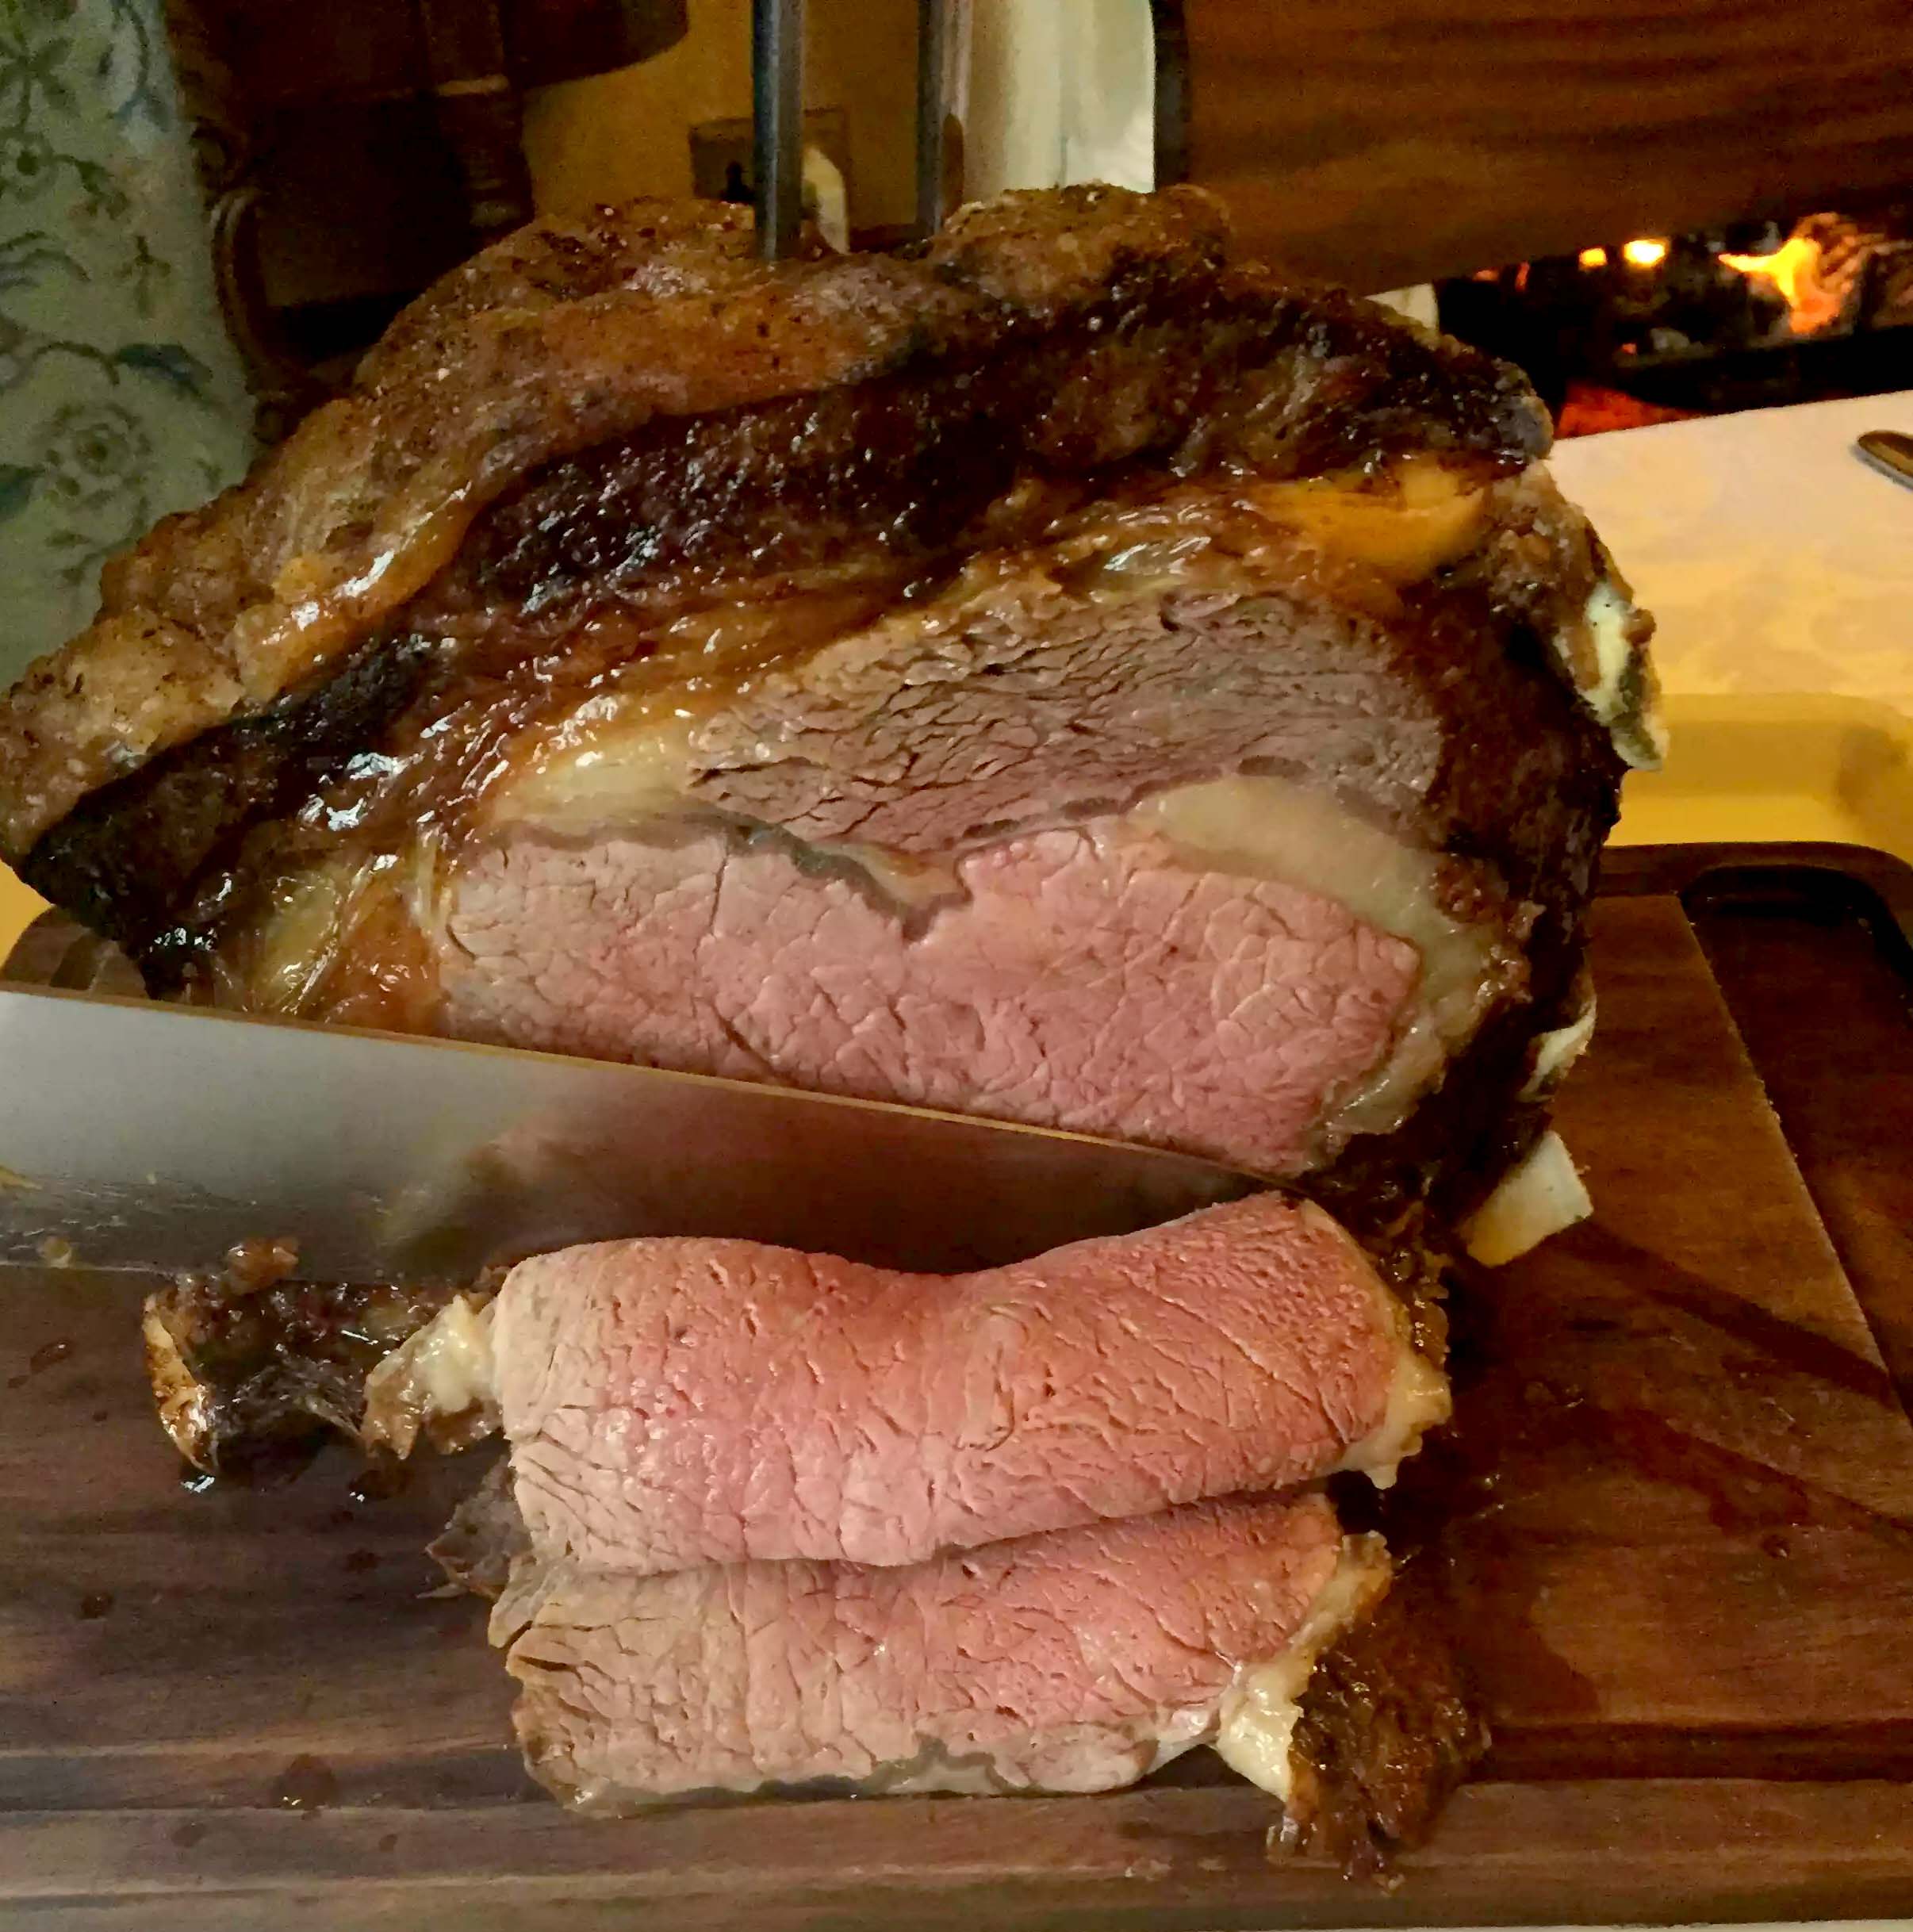 https://emmaeatsandexplores.com/roast-rib-beef/rib-of-beef-4/